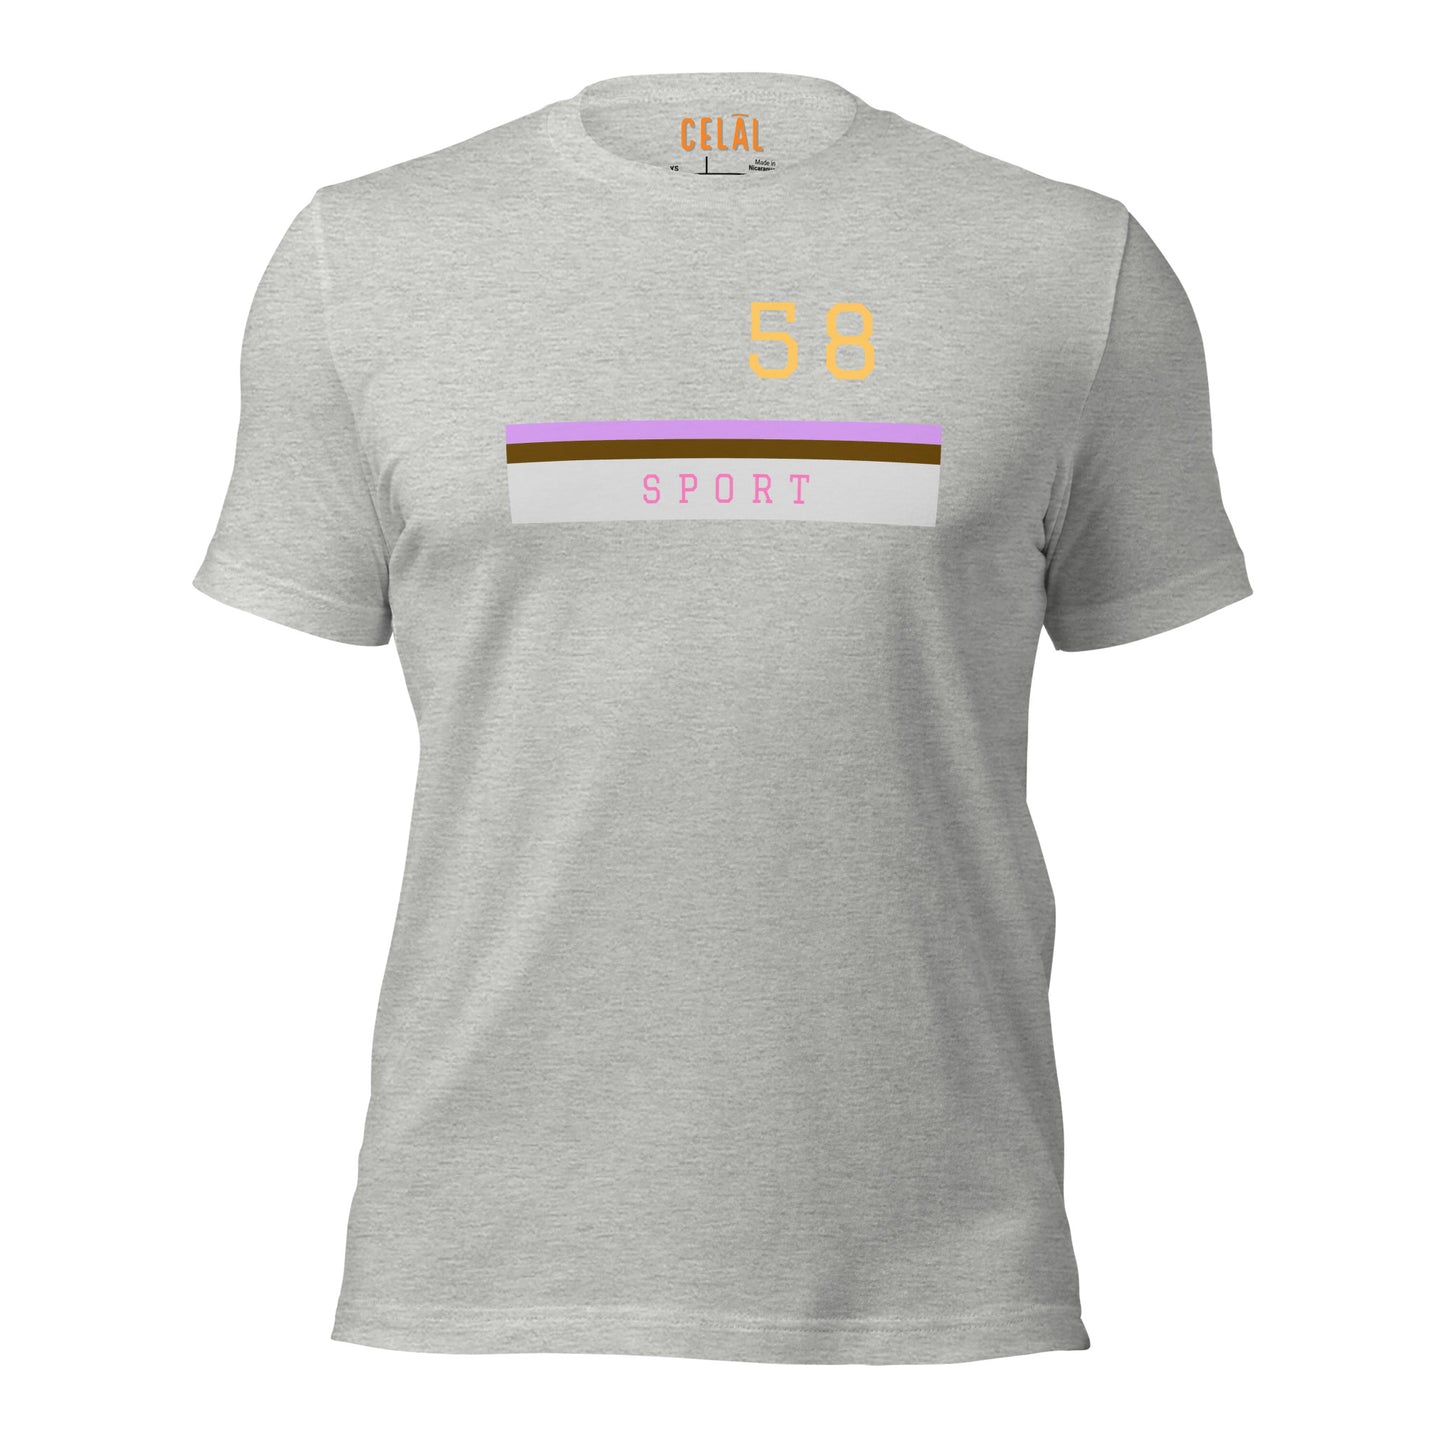 58 Unisex t-shirt